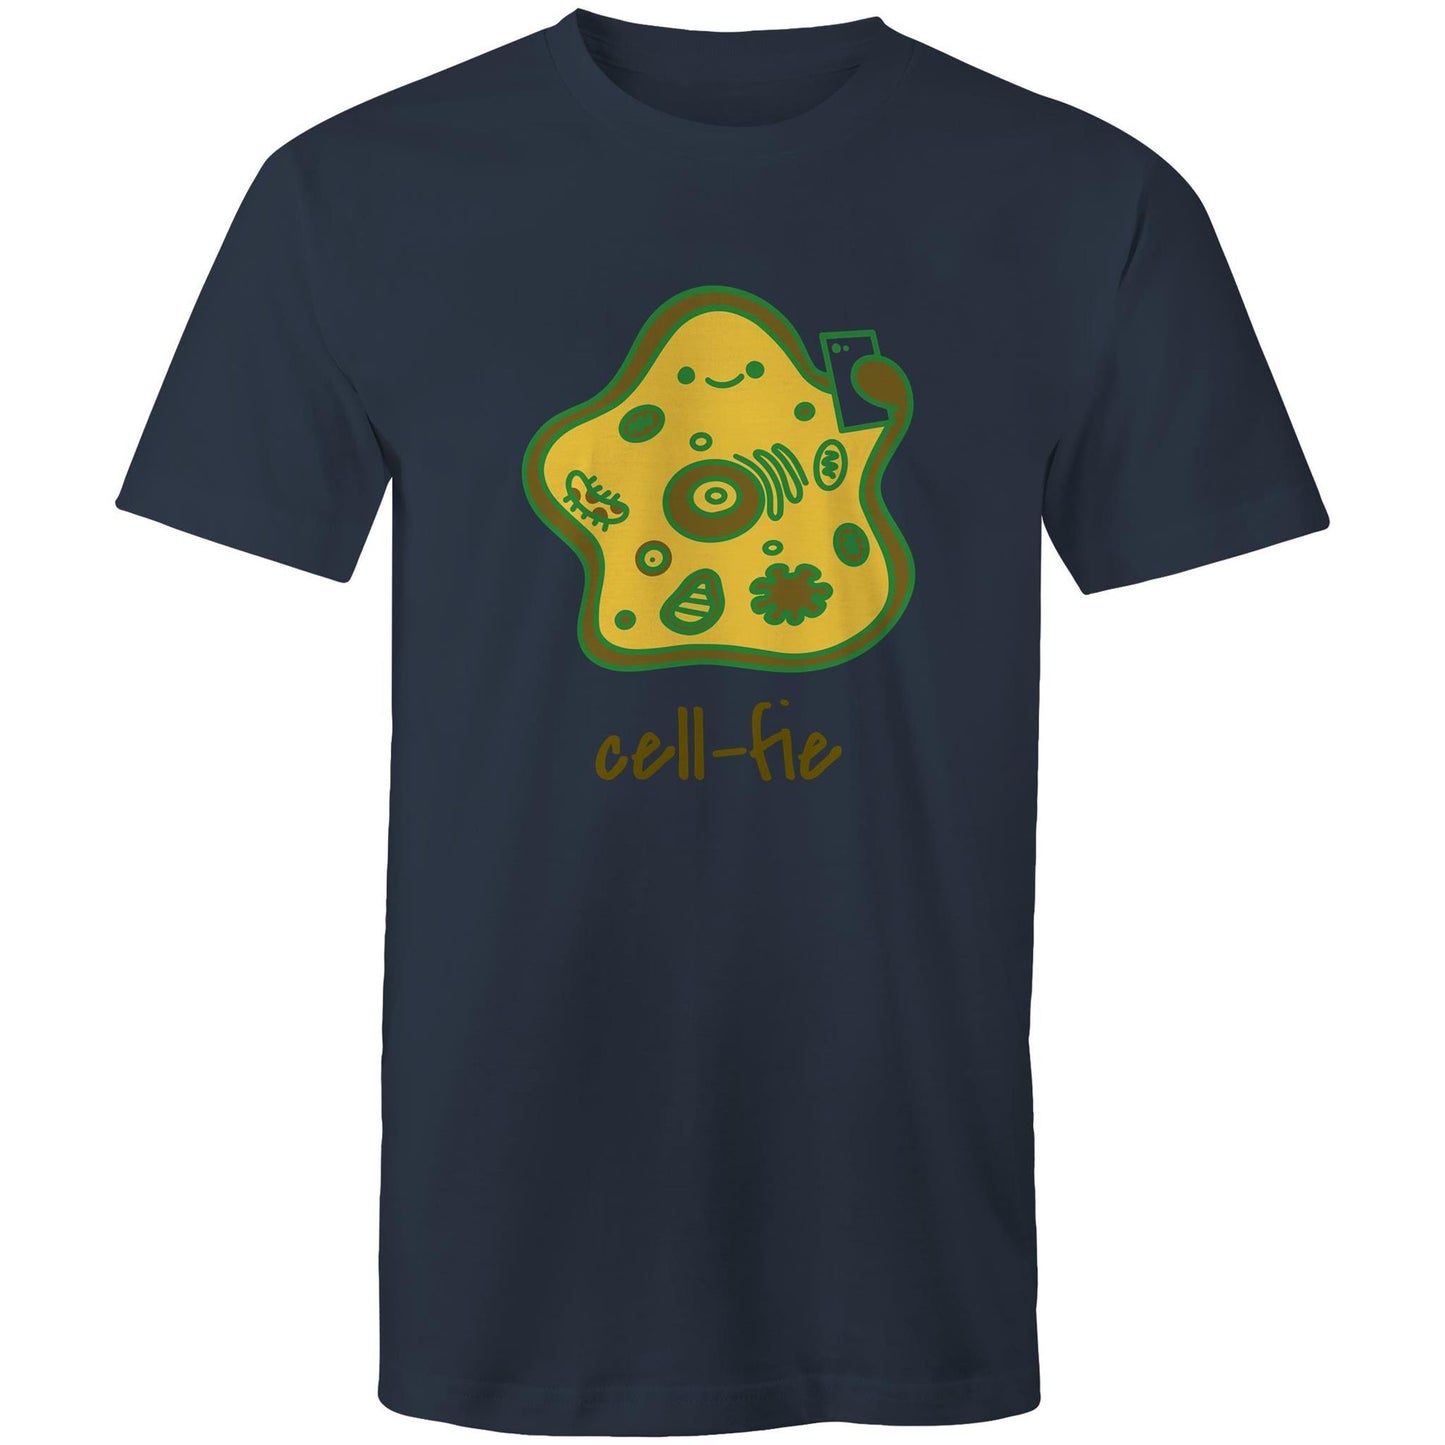 Cell-fie - Mens T-Shirt Navy Mens T-shirt Science